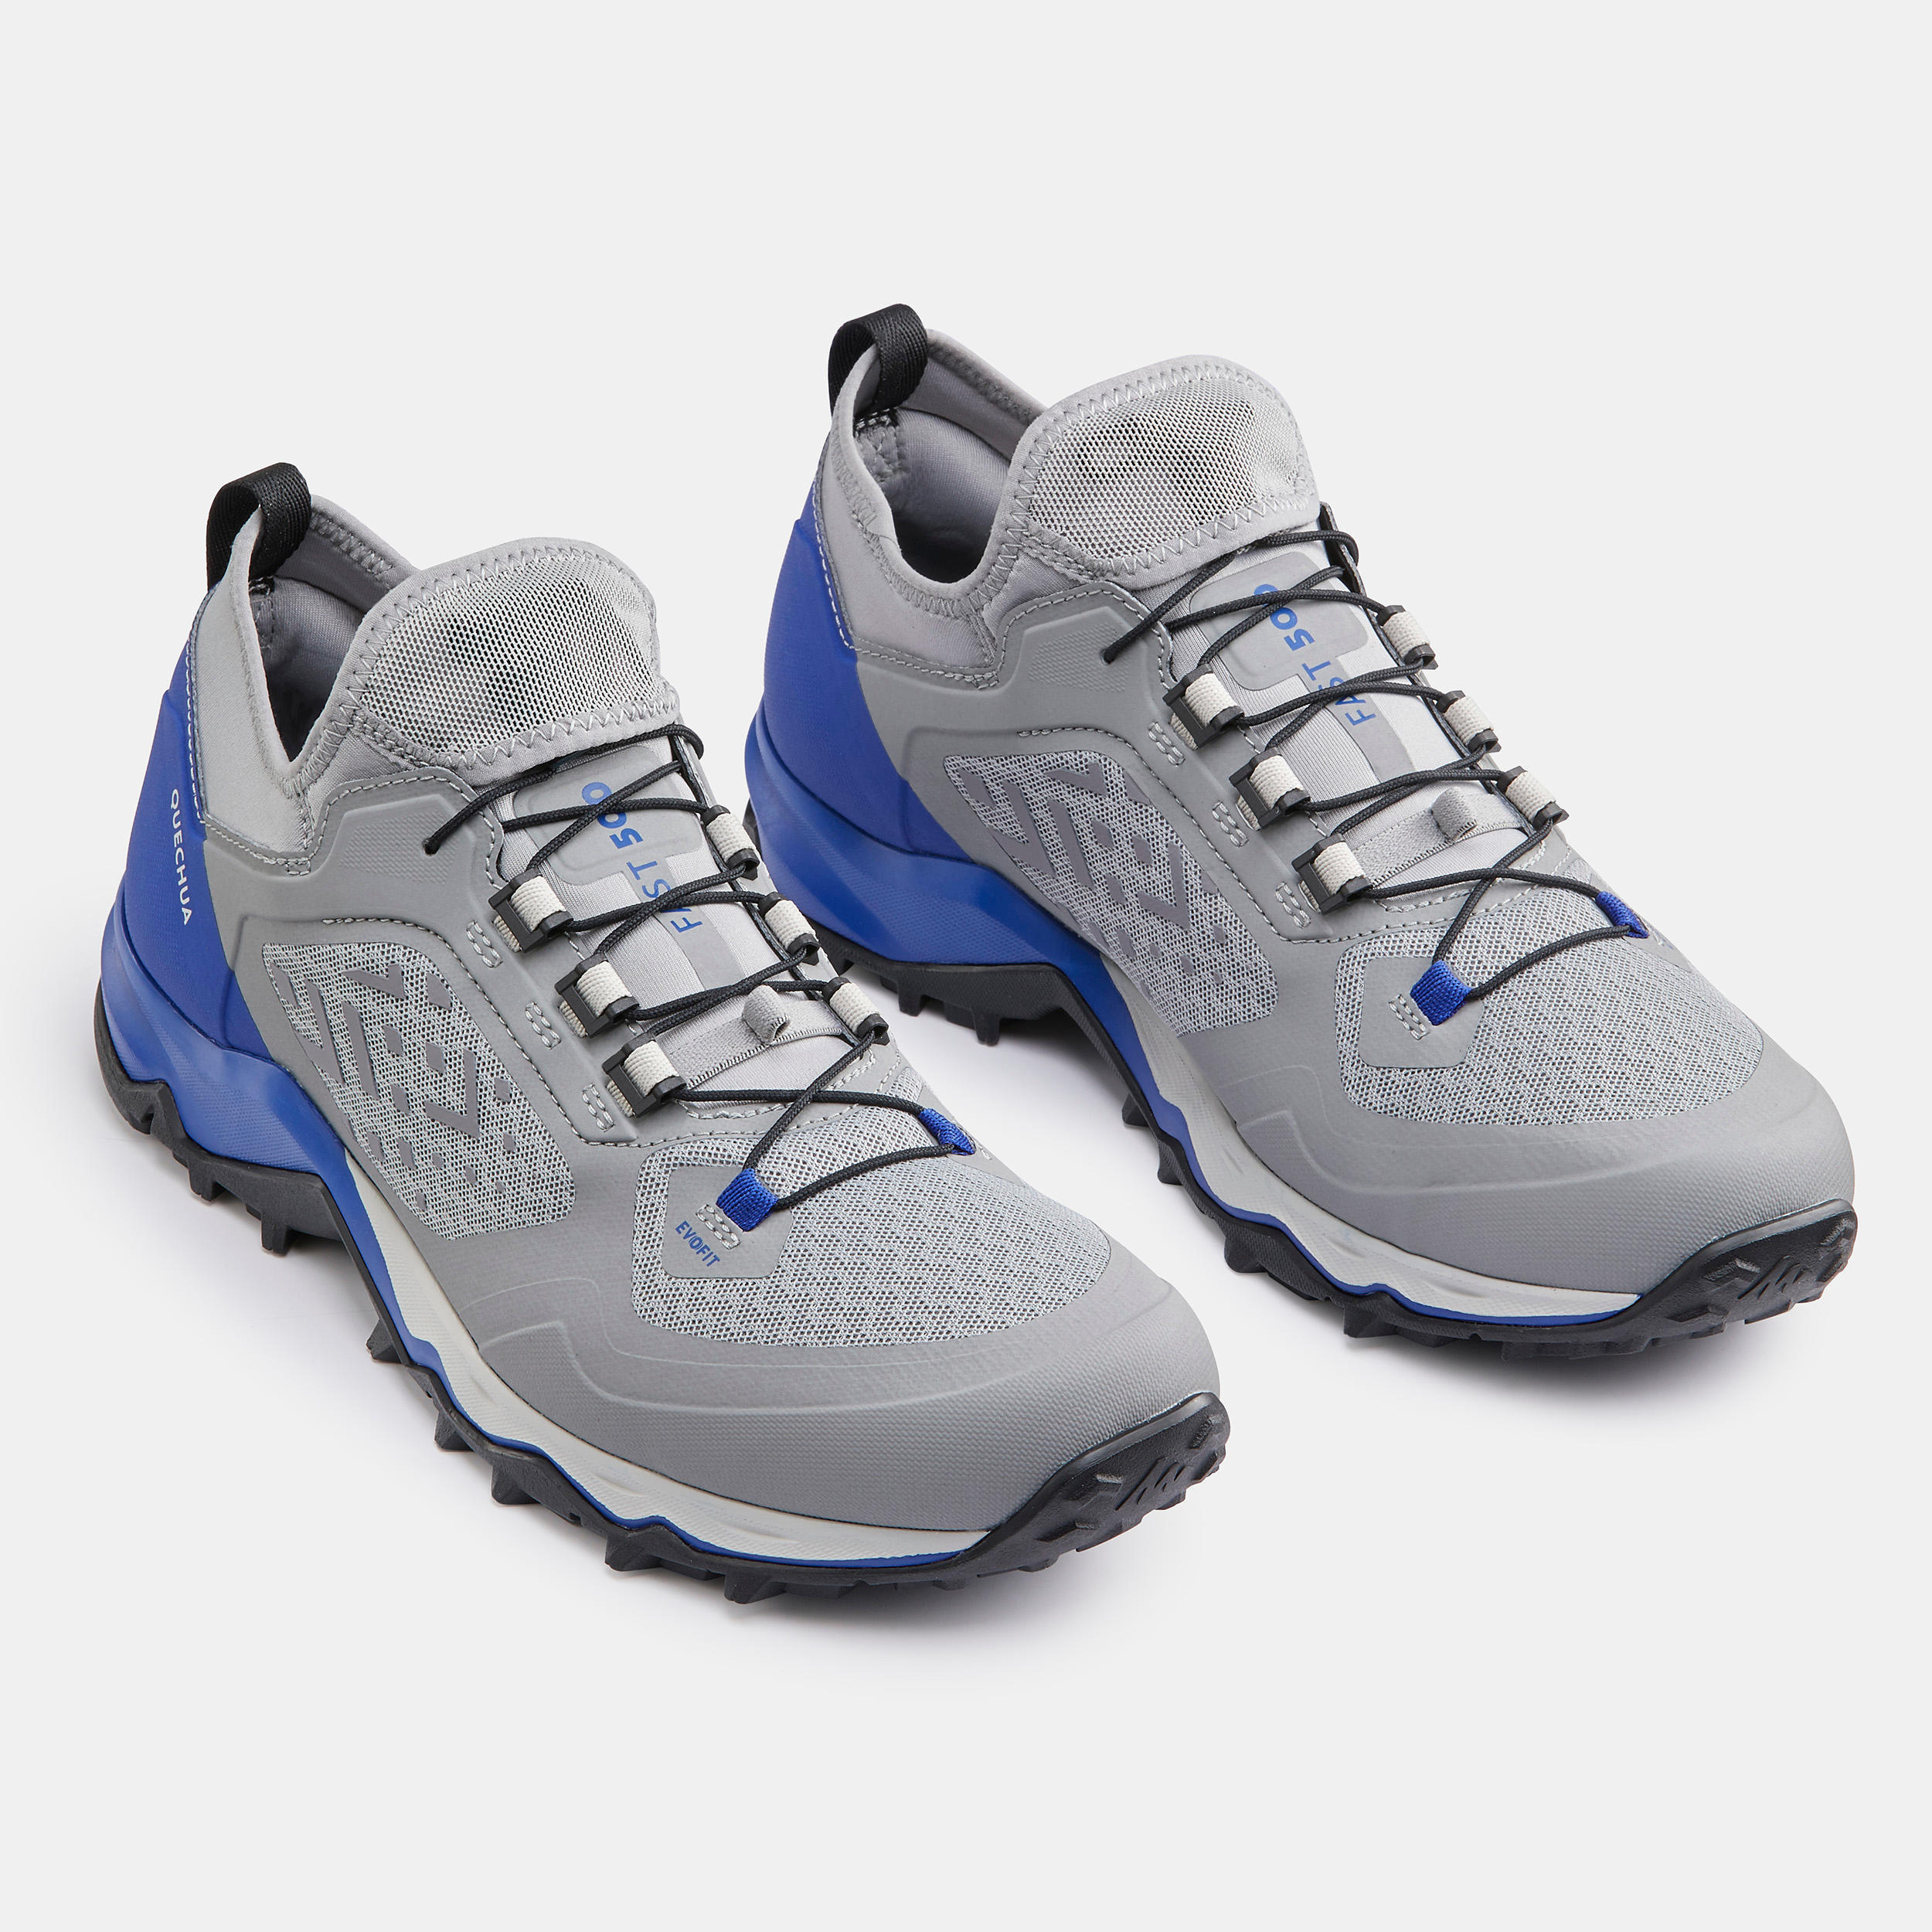 Men’s Fast Hiking Ultra Lightweight Boots - FH500 4/7